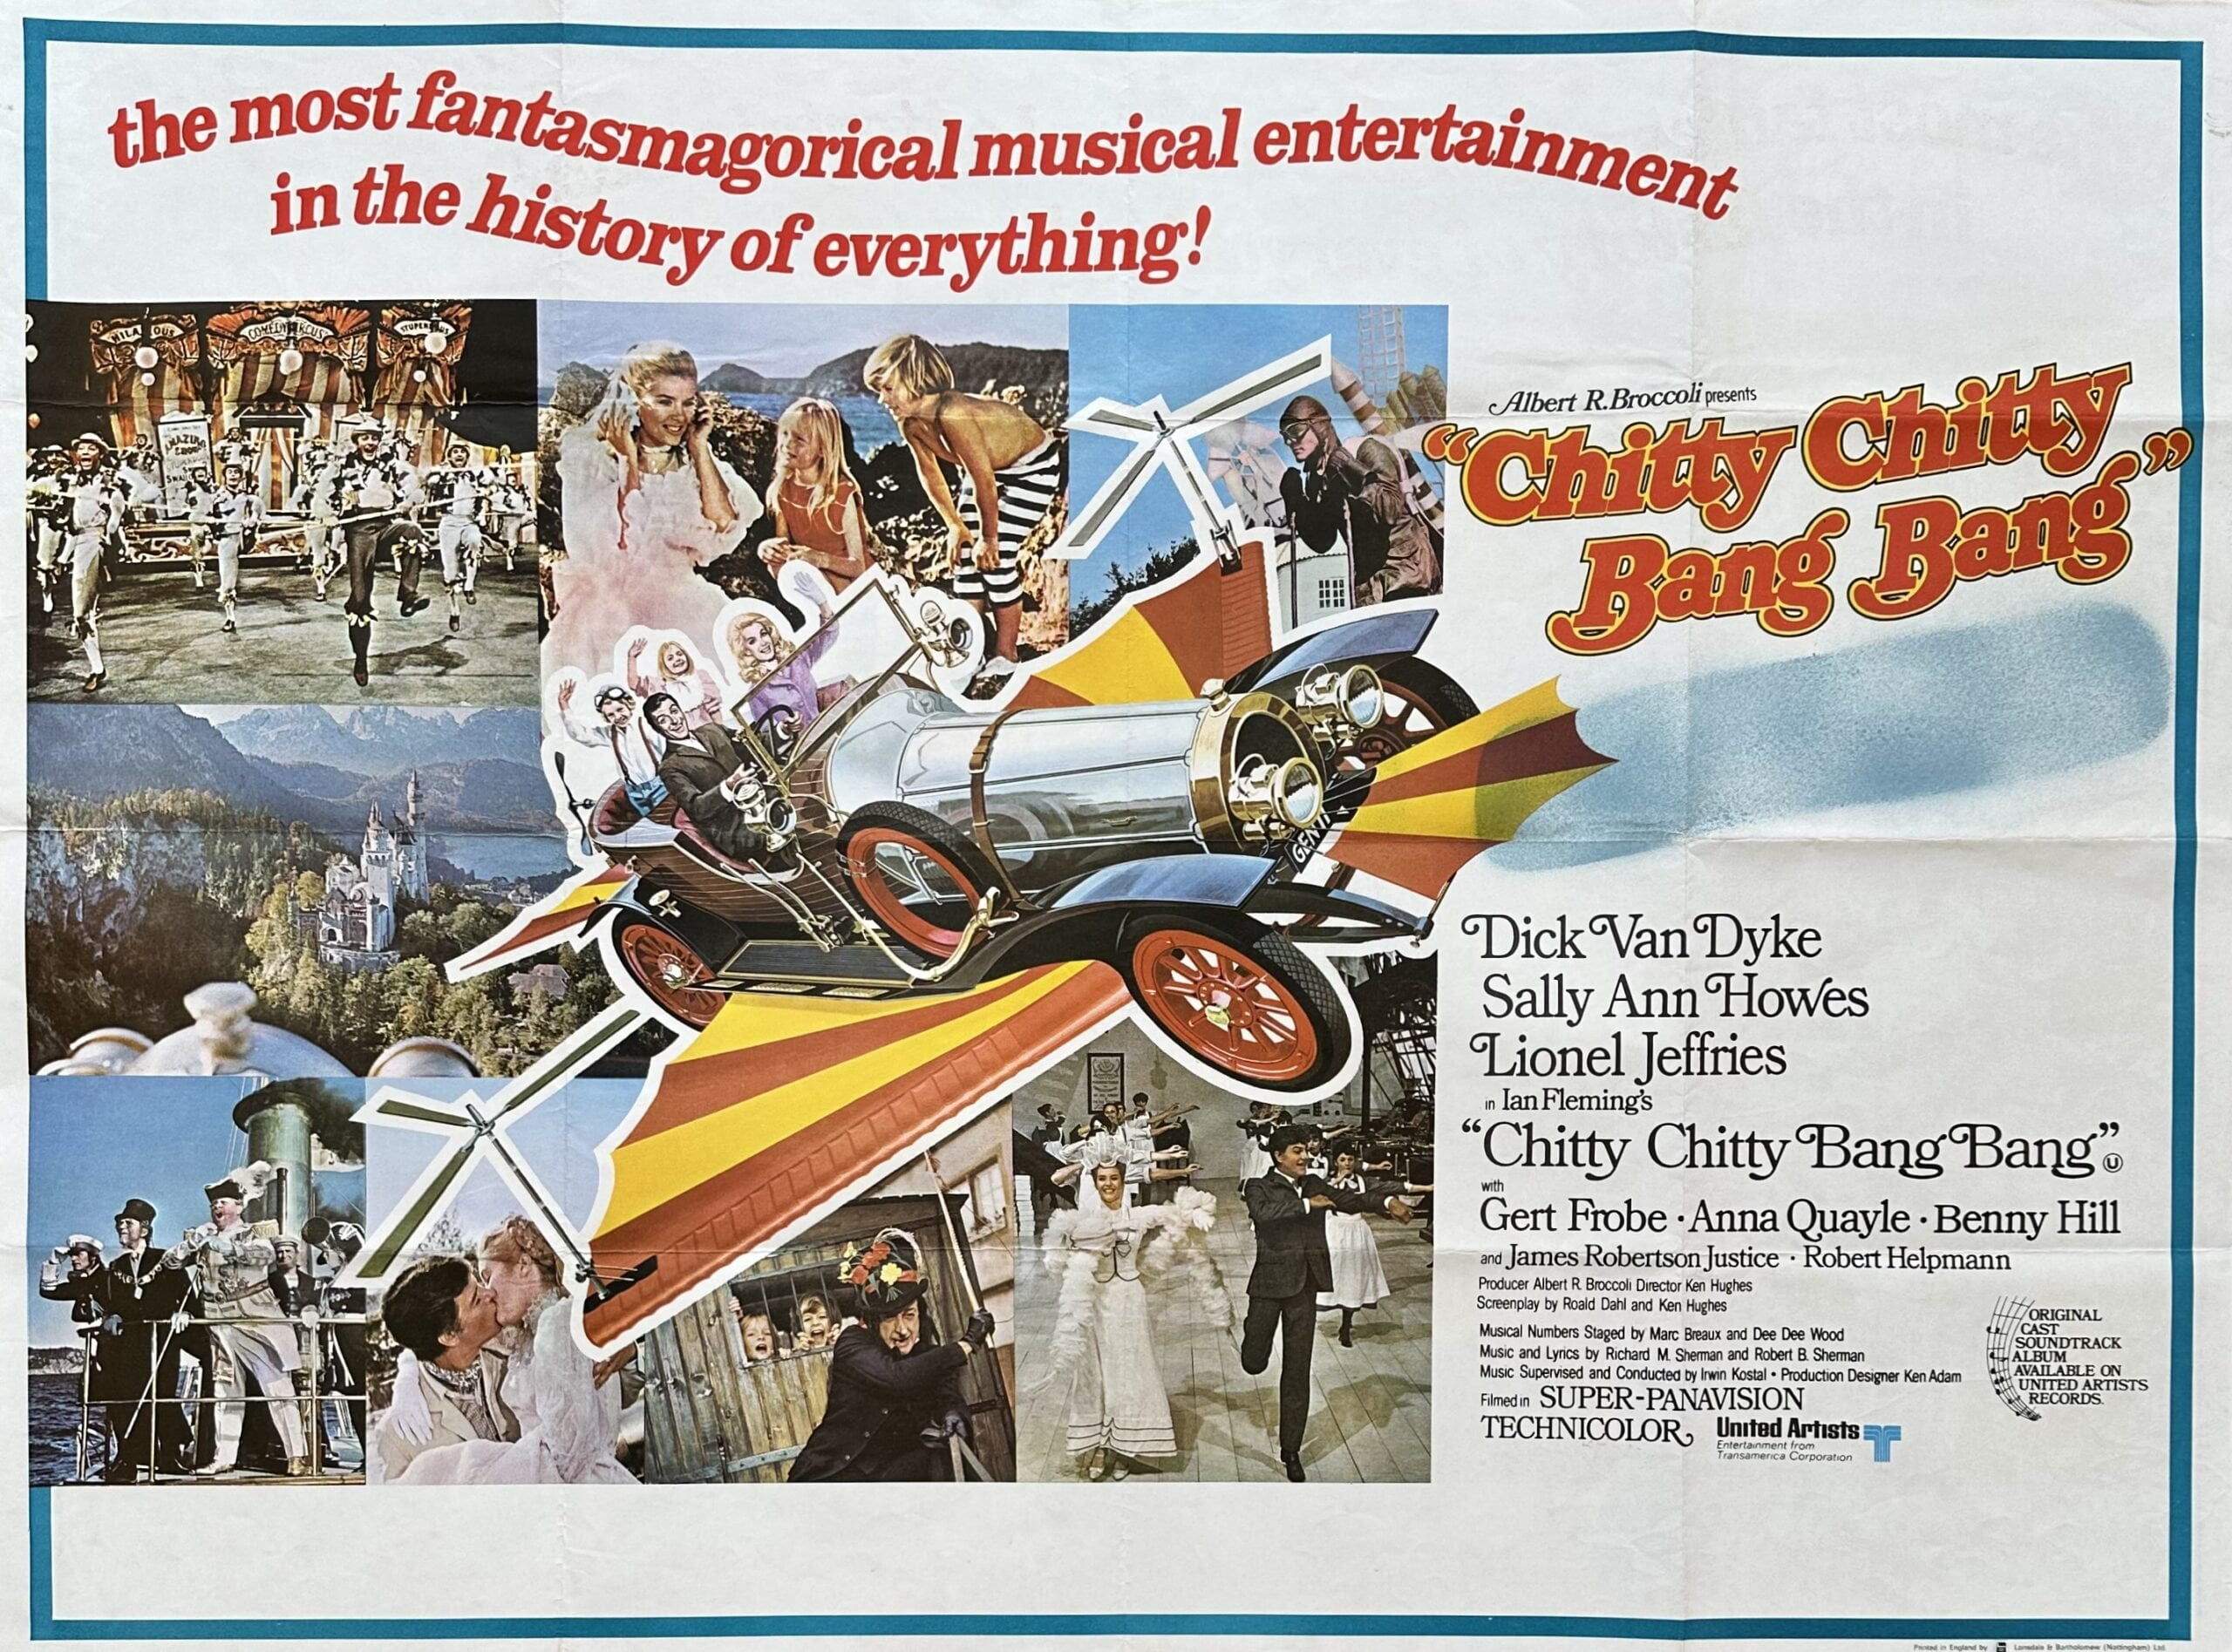 Original vintage cinema movie poster for the musical Chitty Chitty Bang Bang